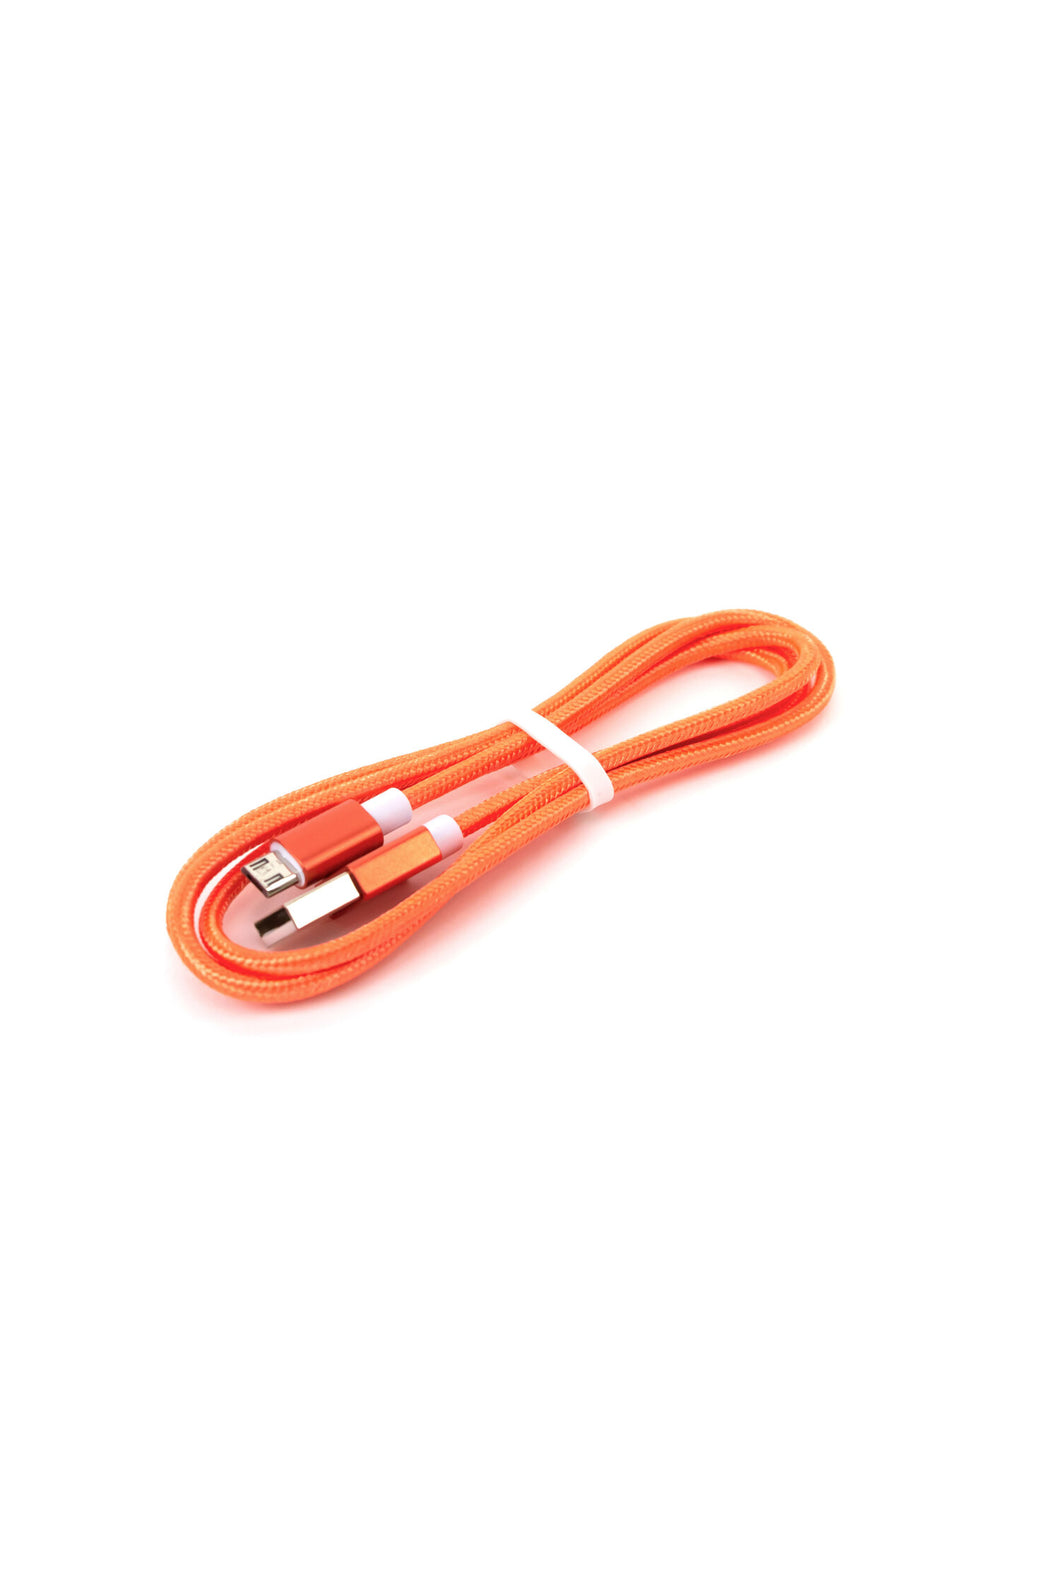 Electrosmith Orange Micro USB Cable